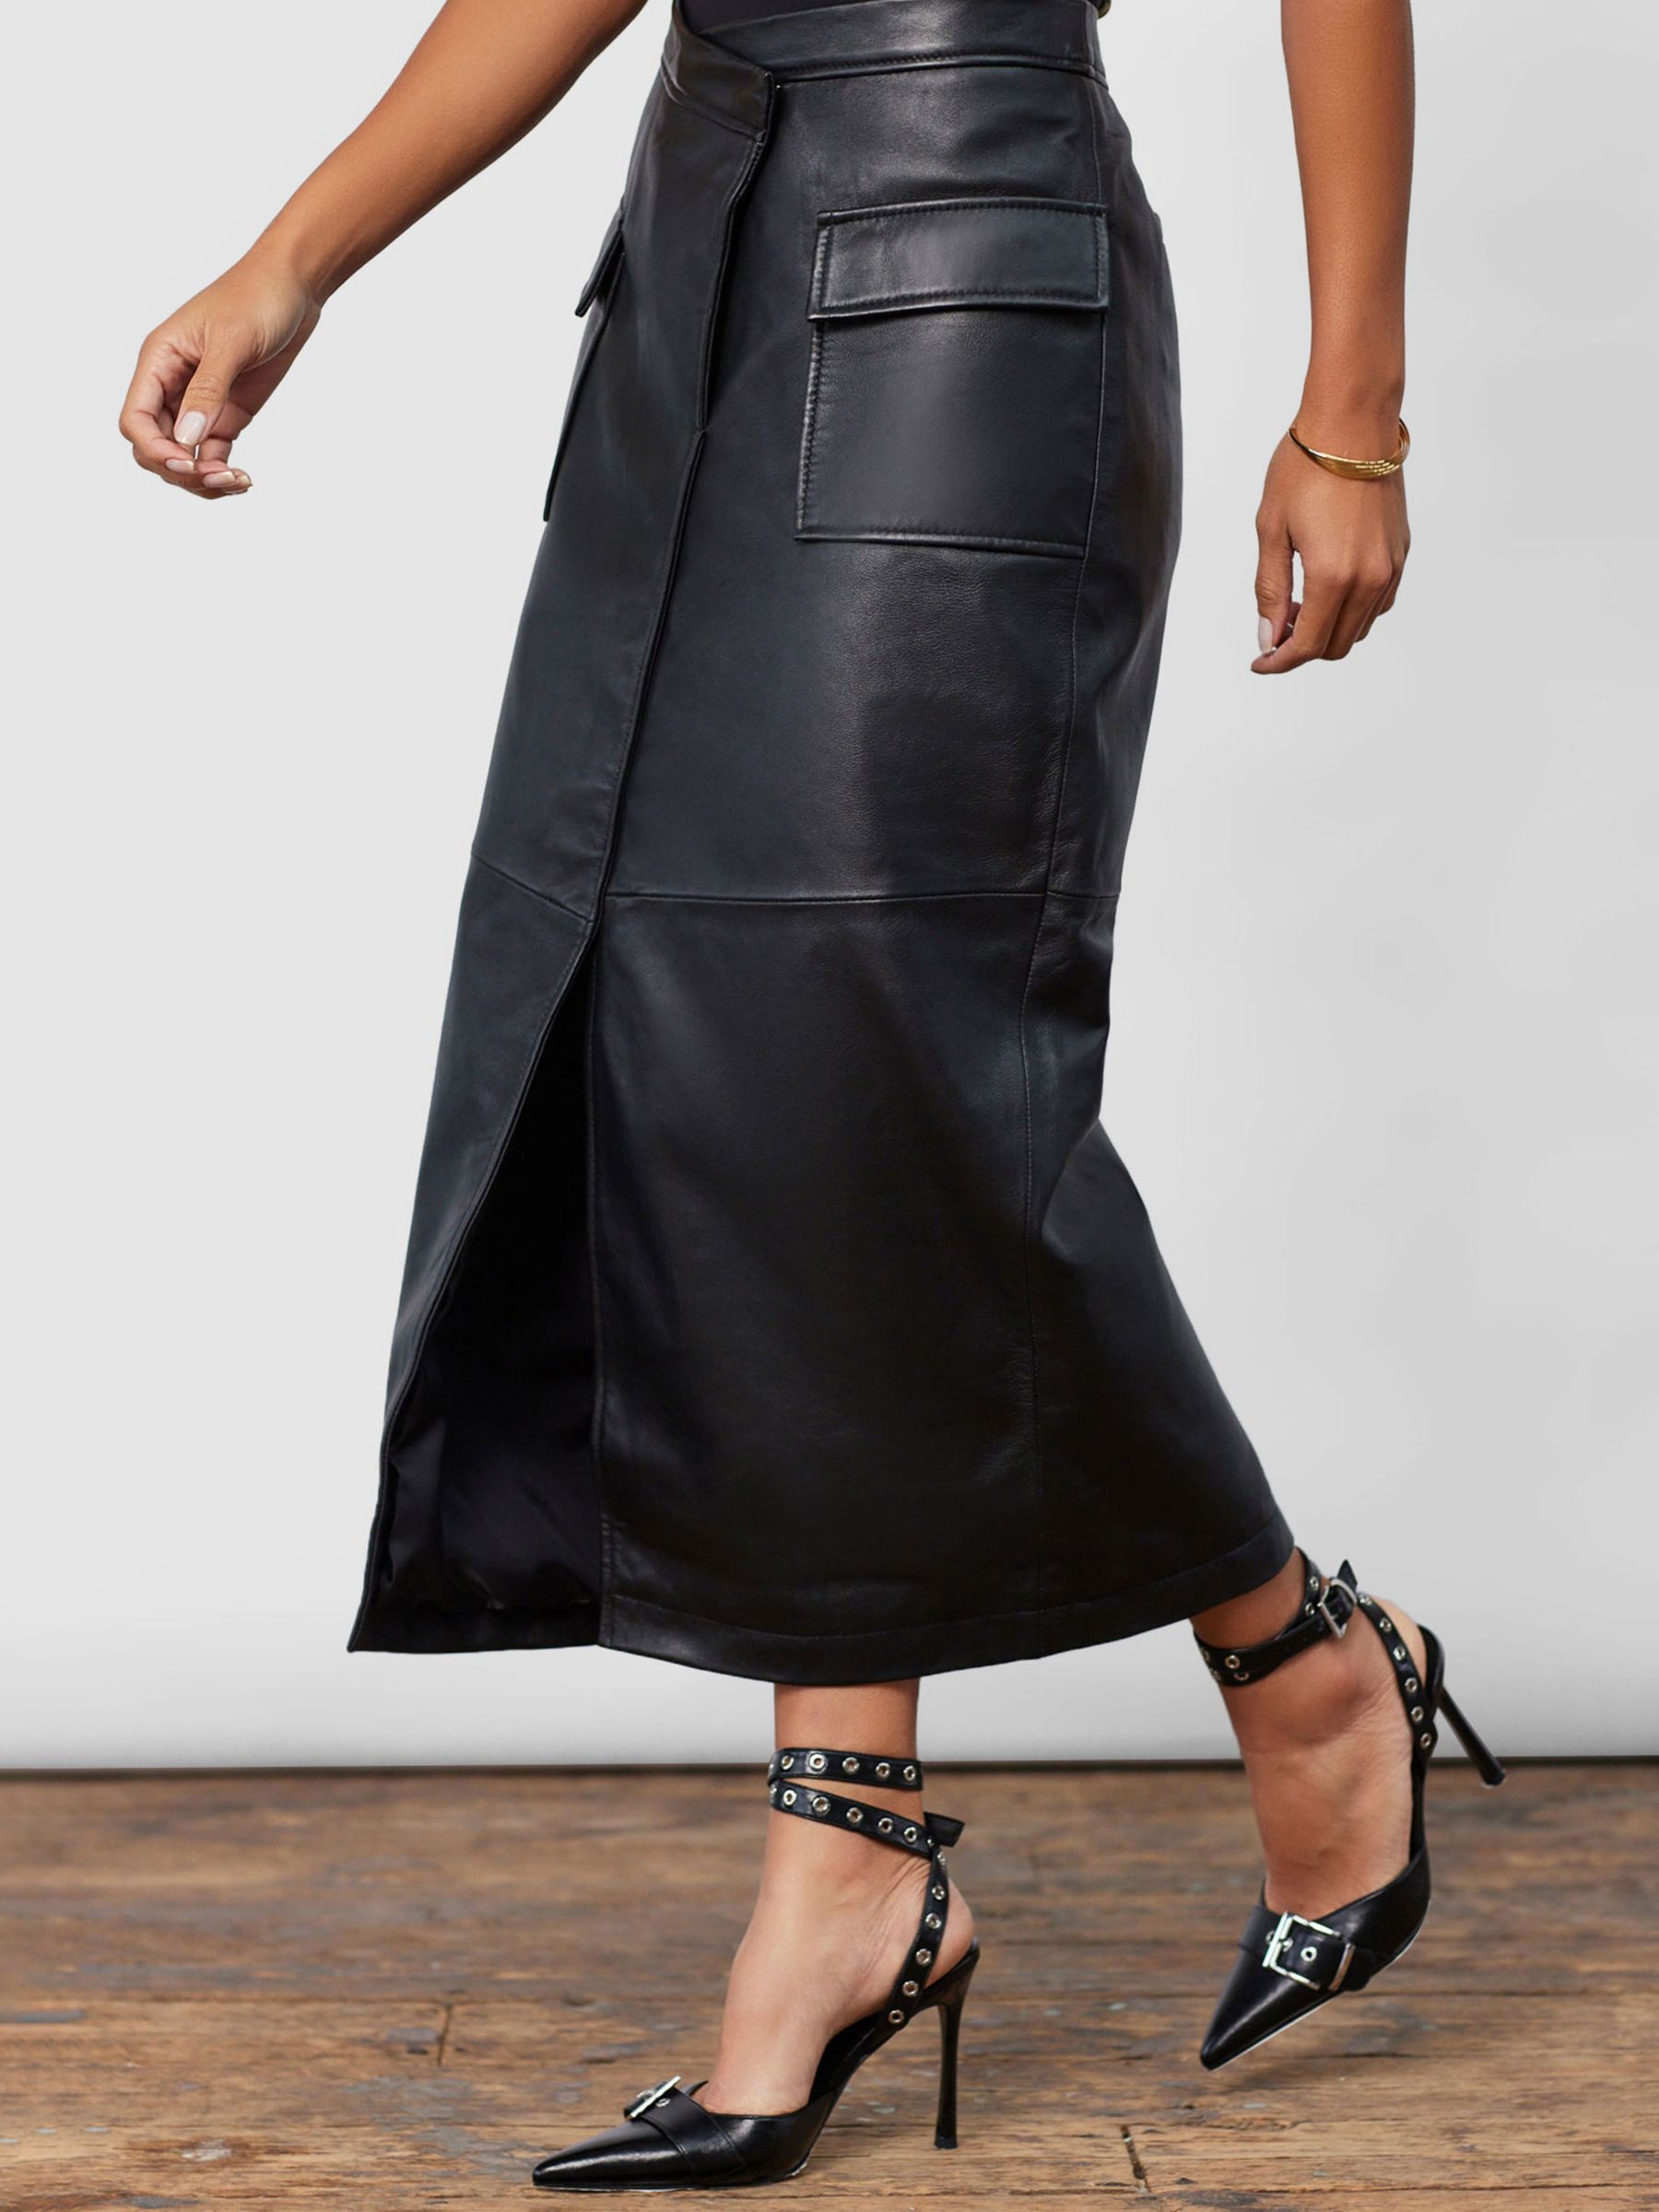 Women's Black Leather Skirts